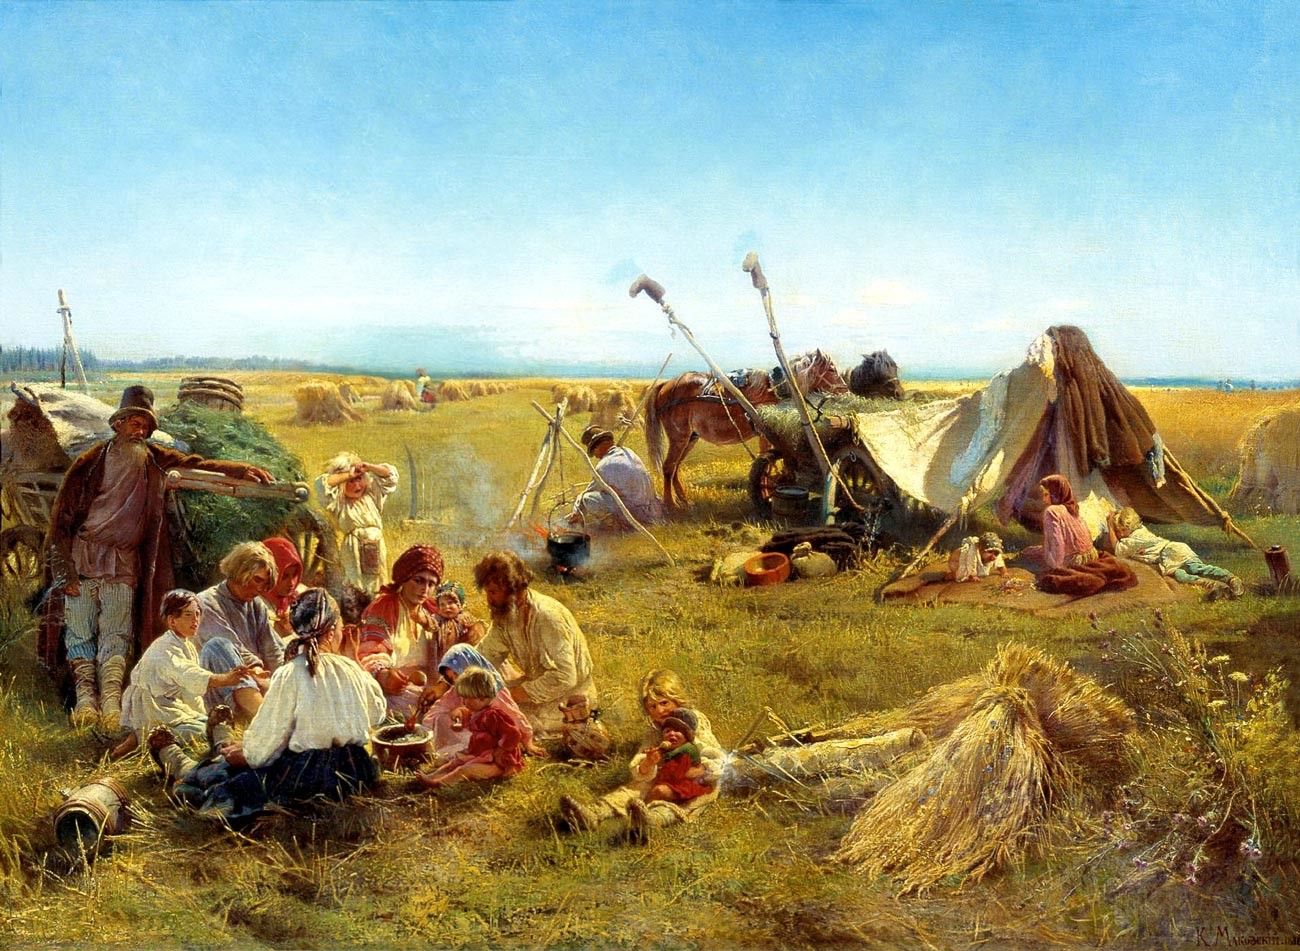 Almoço de camponeses no campo. Pintura de Konstantin Makovski, 1871.